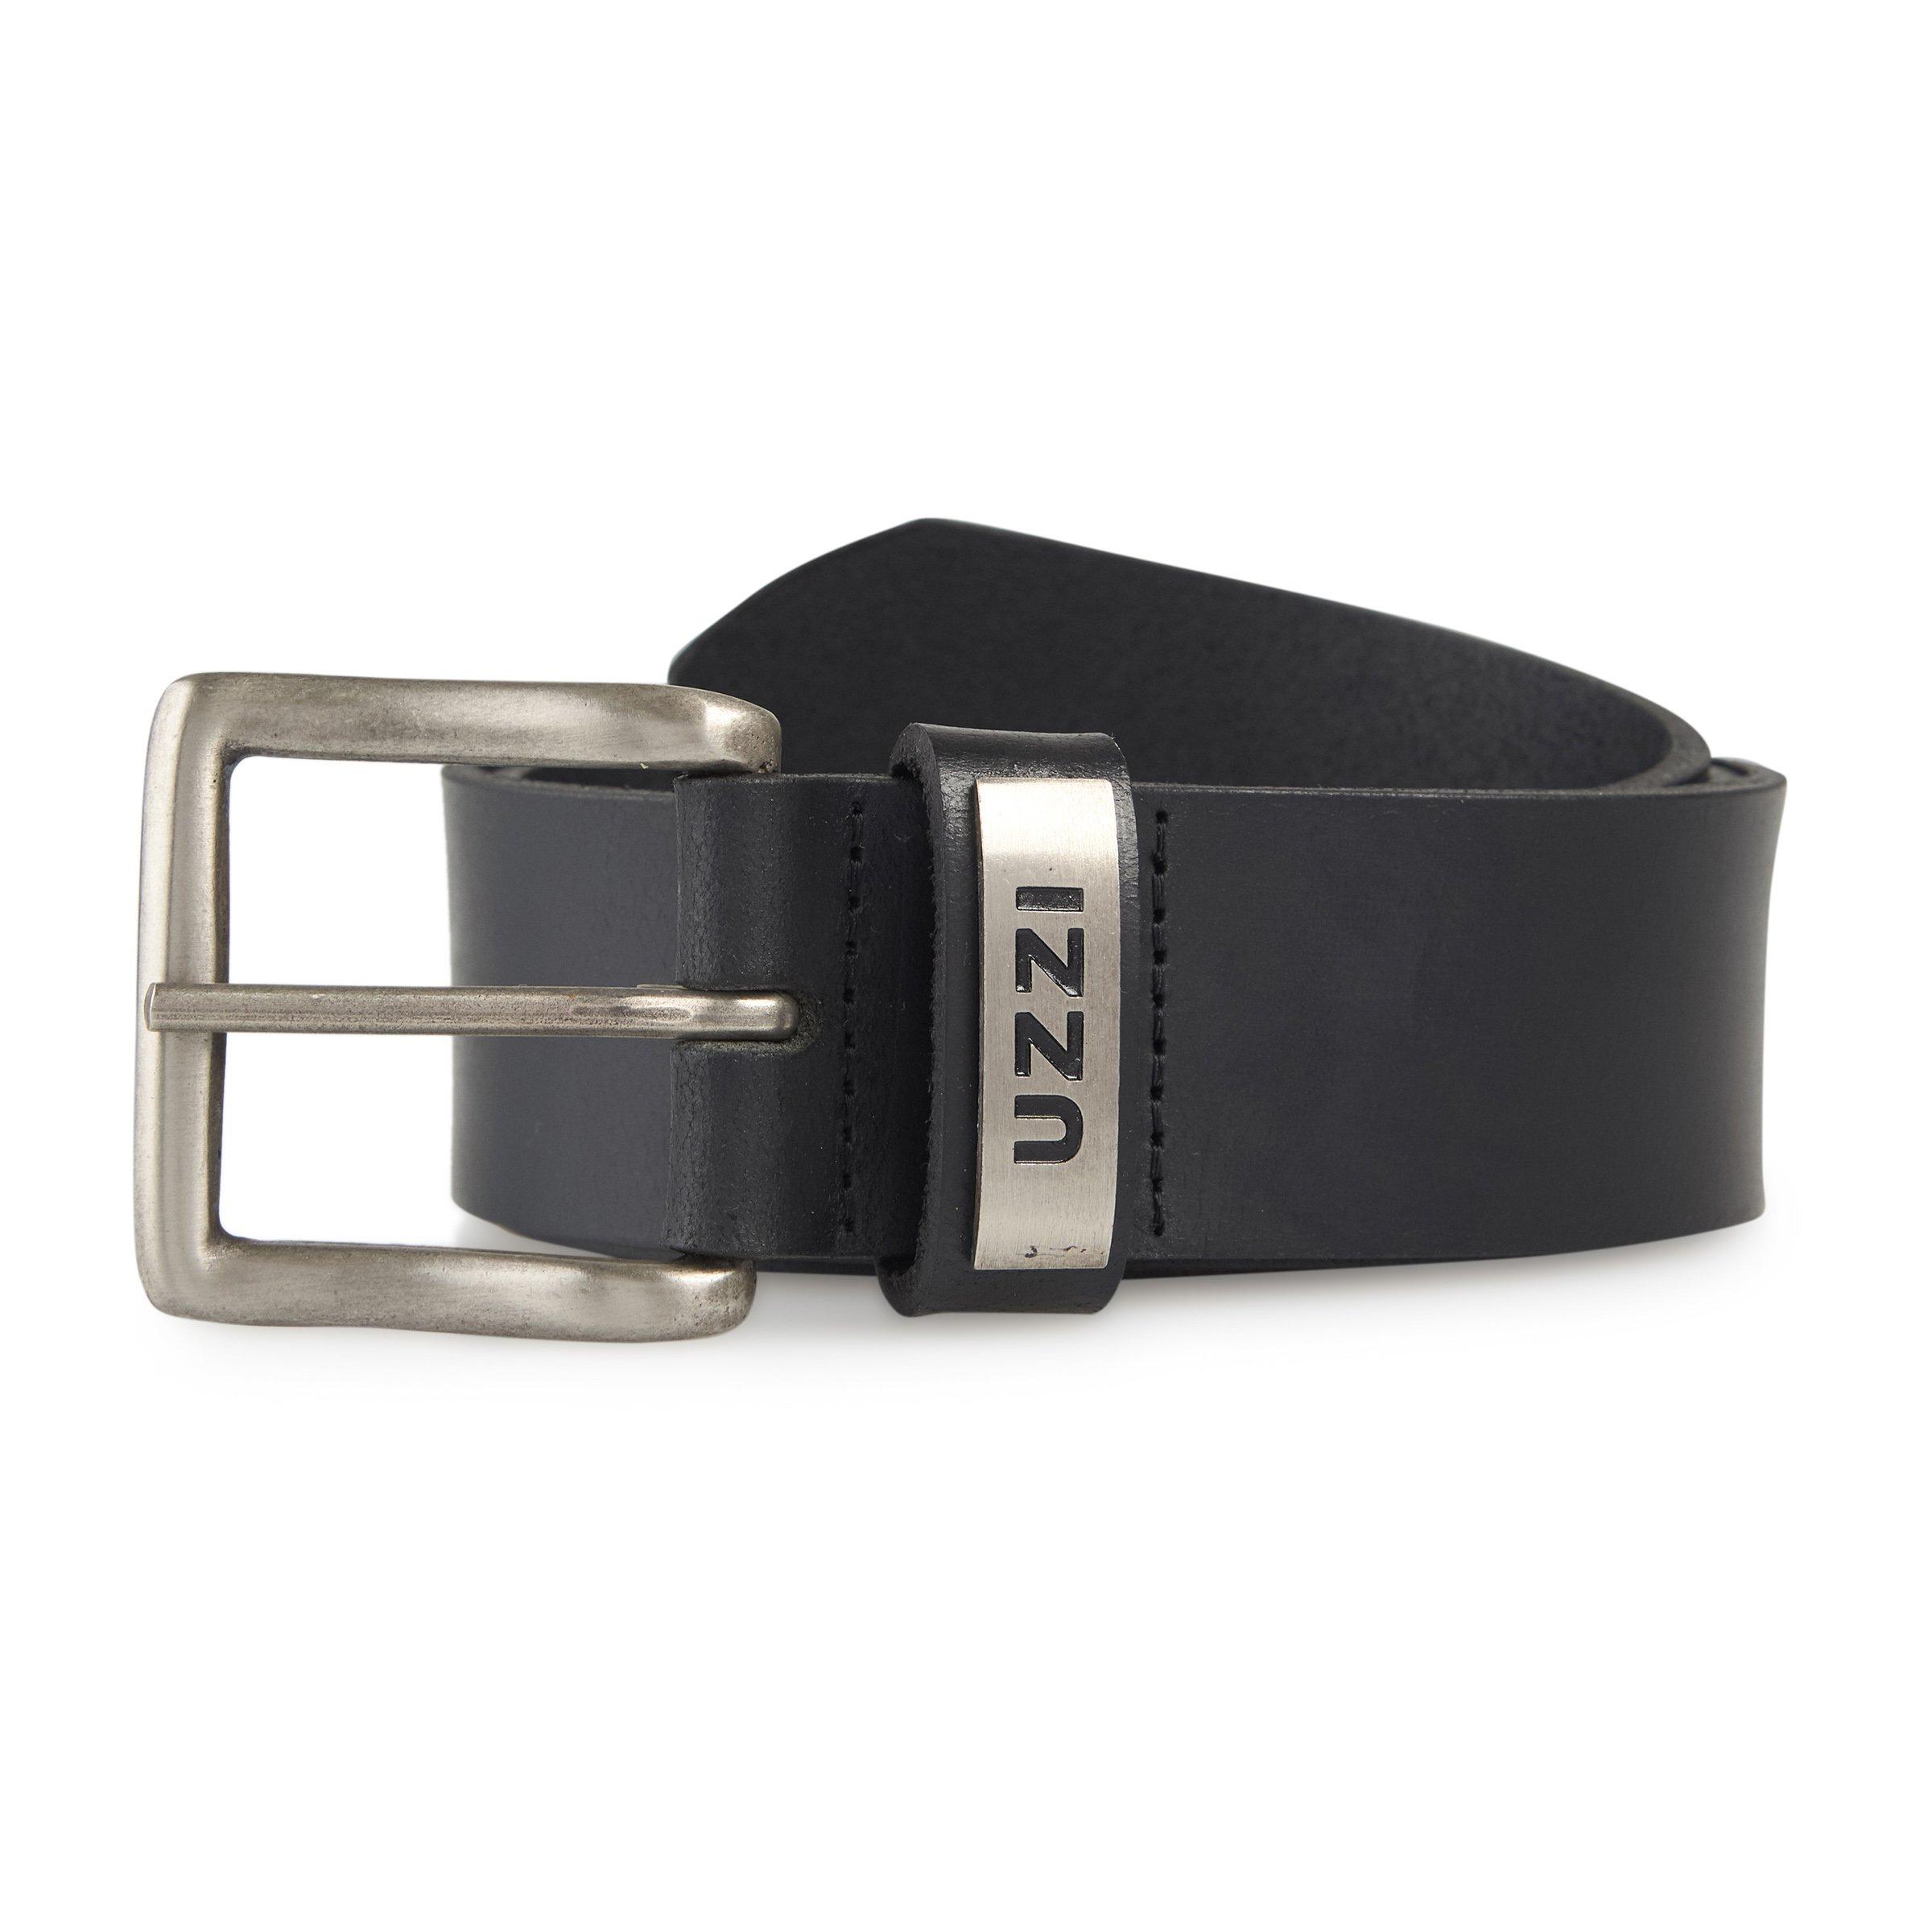 Buy UZZI Black Leather Belt Online | Truworths